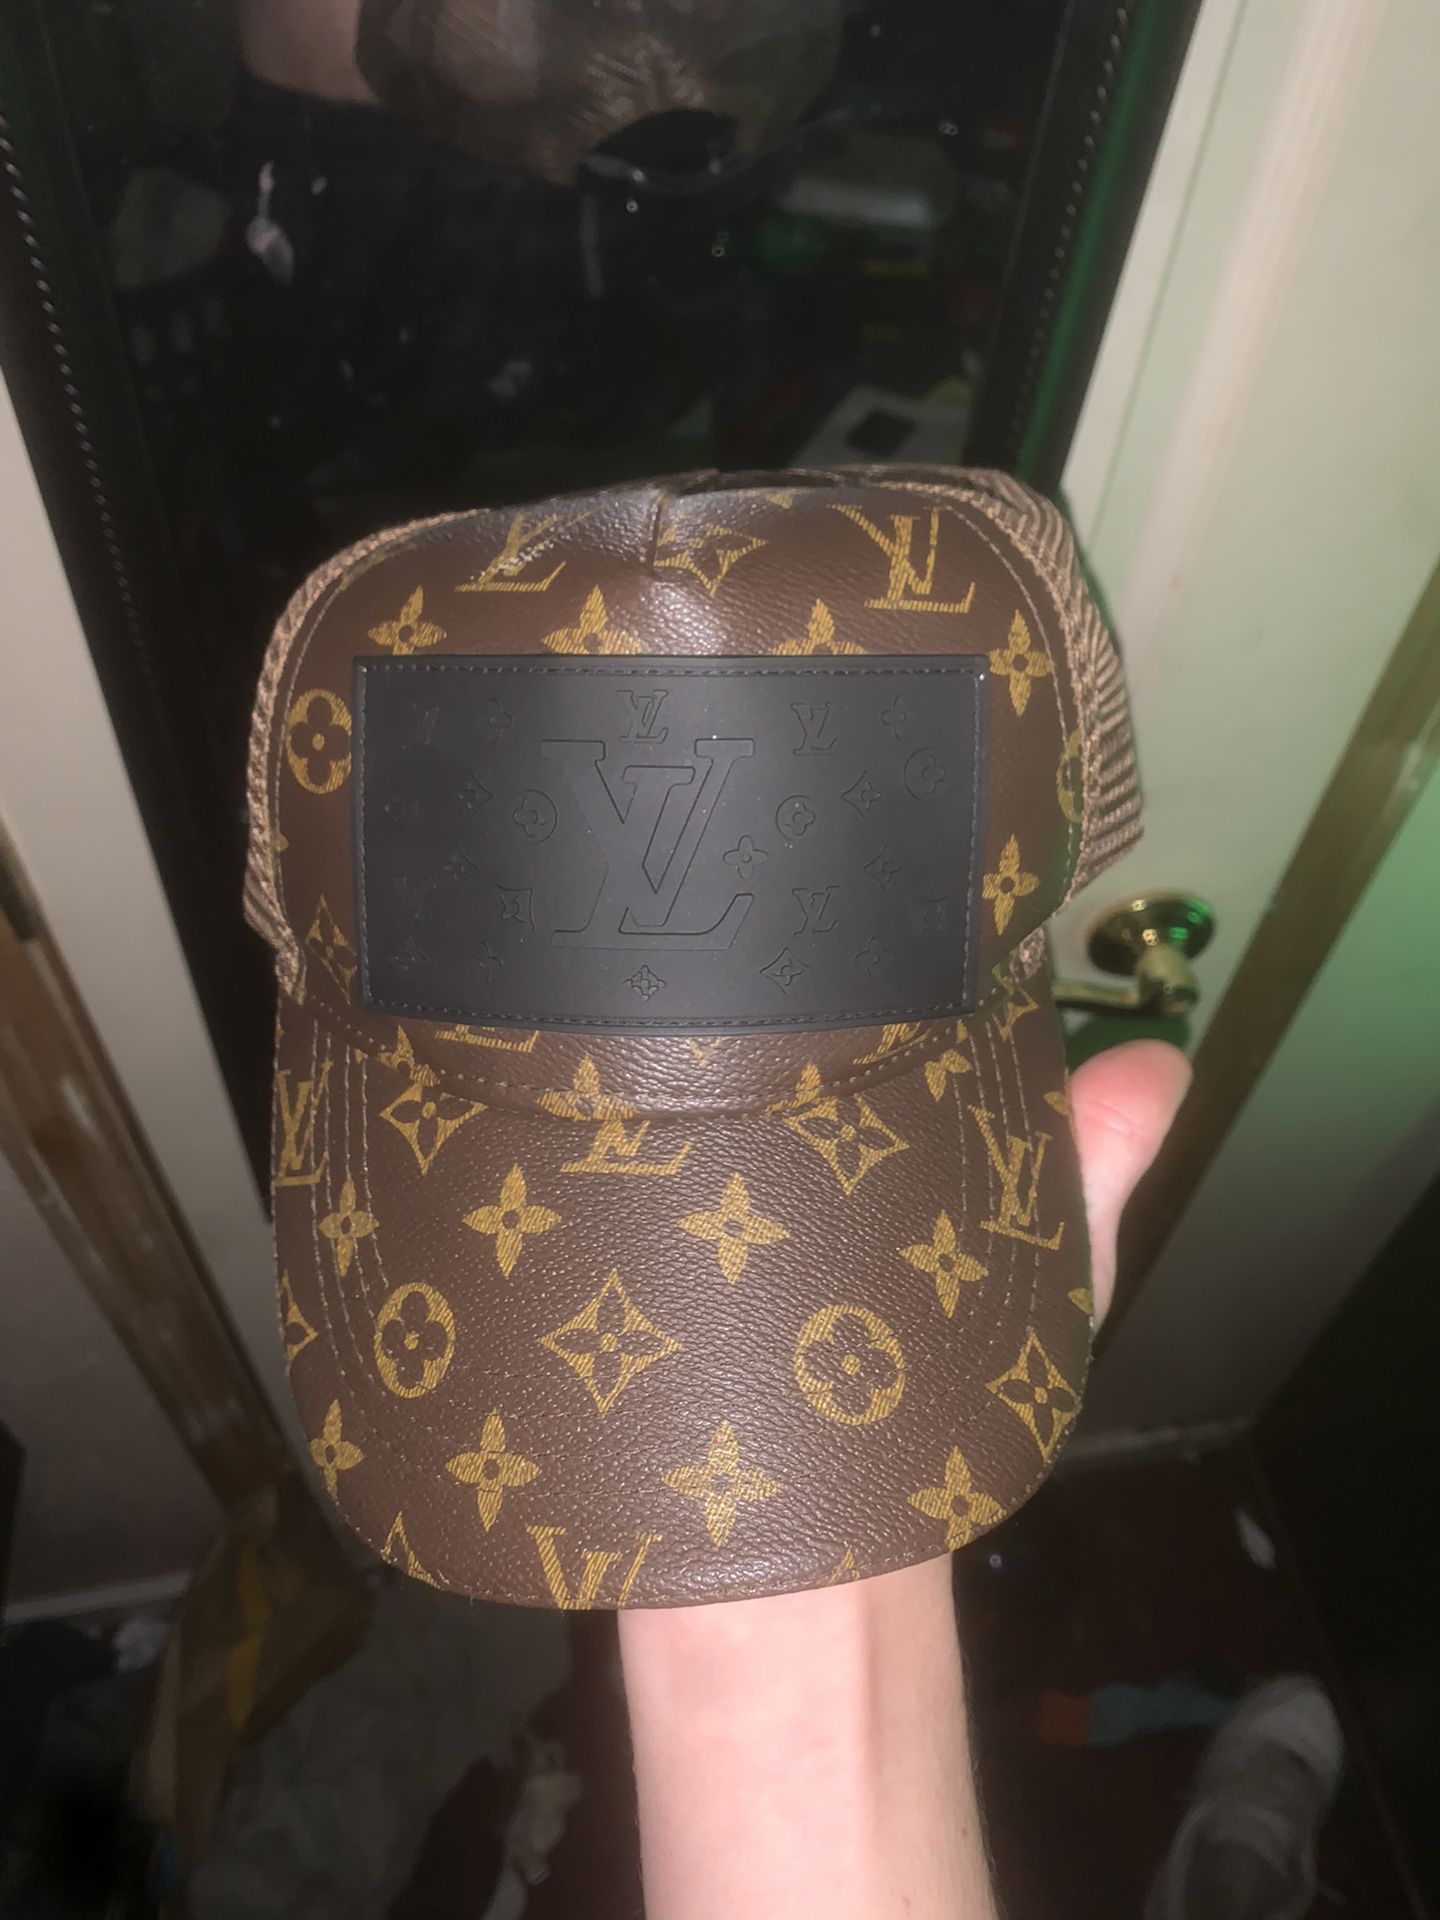 Cap for Sale in Bronx, NY - OfferUp  Louis vuitton cap, Hats for men,  Leather cap